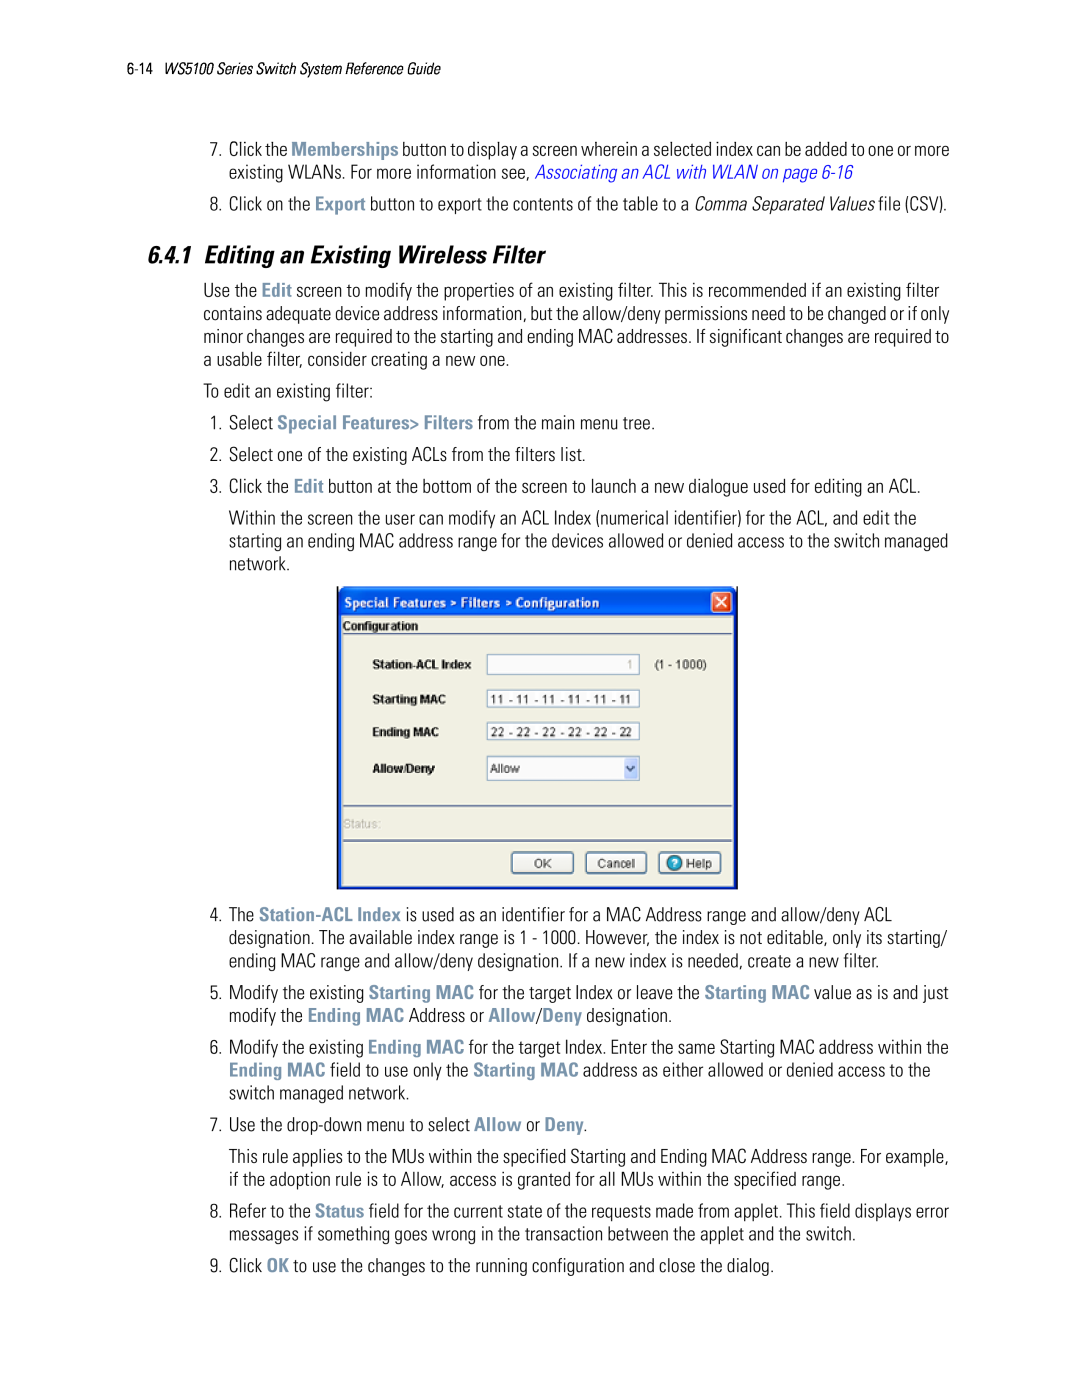 Motorola WS5100 manual 6.4.1Editing an Existing Wireless Filter 